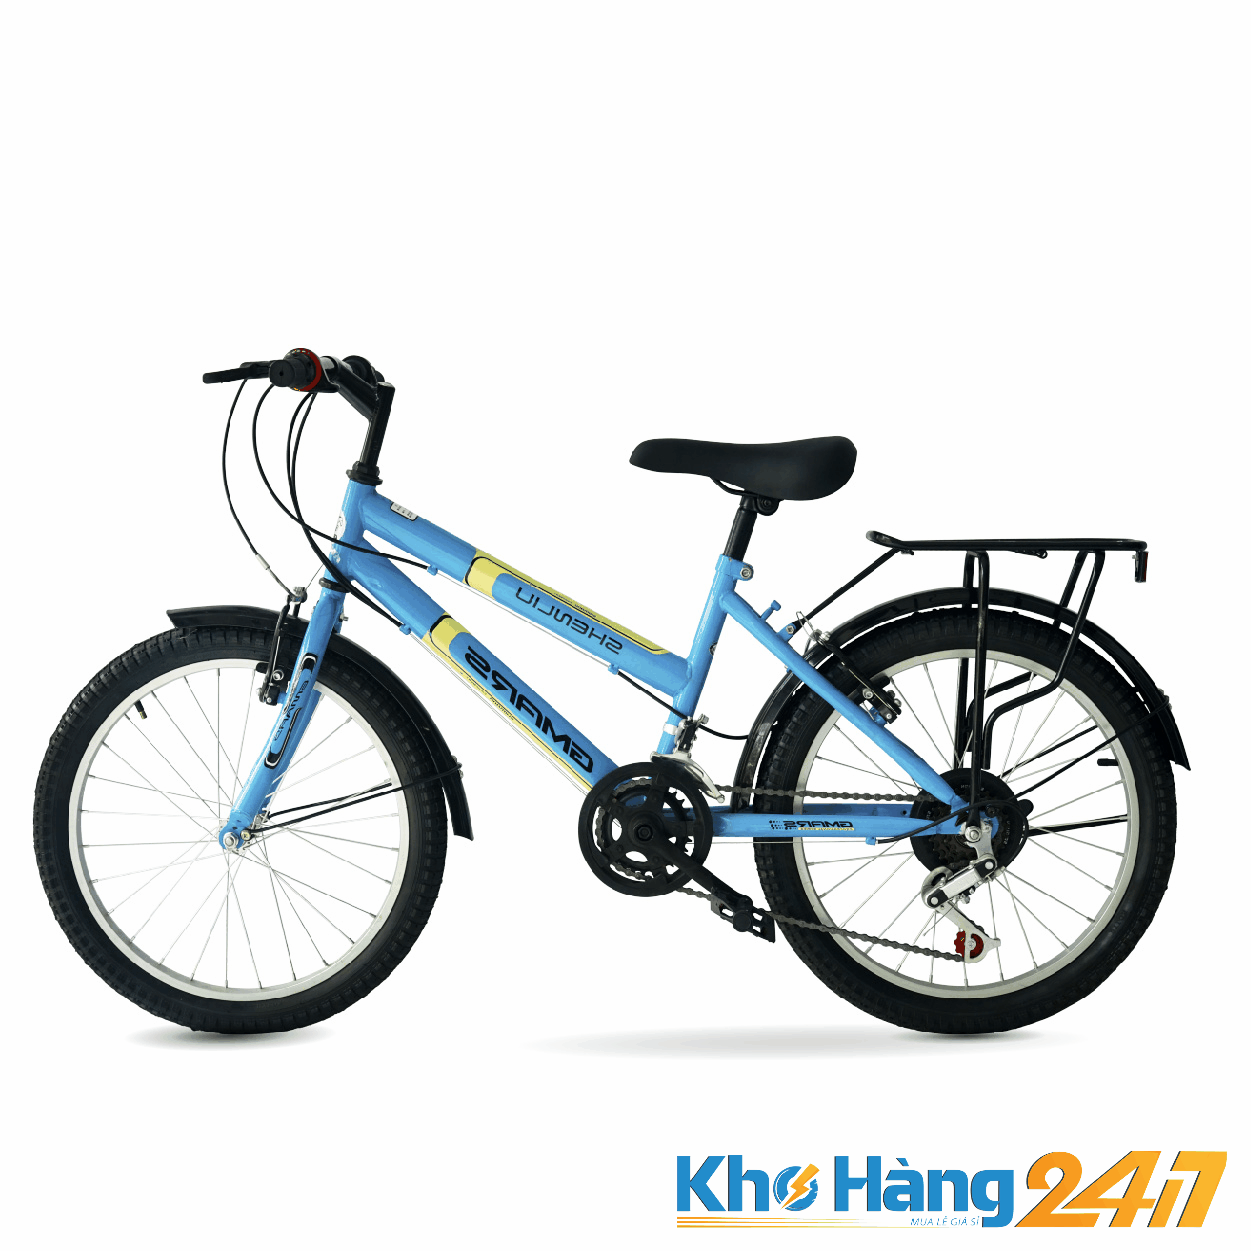 XE DAP TRE EM SHENLIU GMARS 01 - Xe đạp trẻ em Shenliu